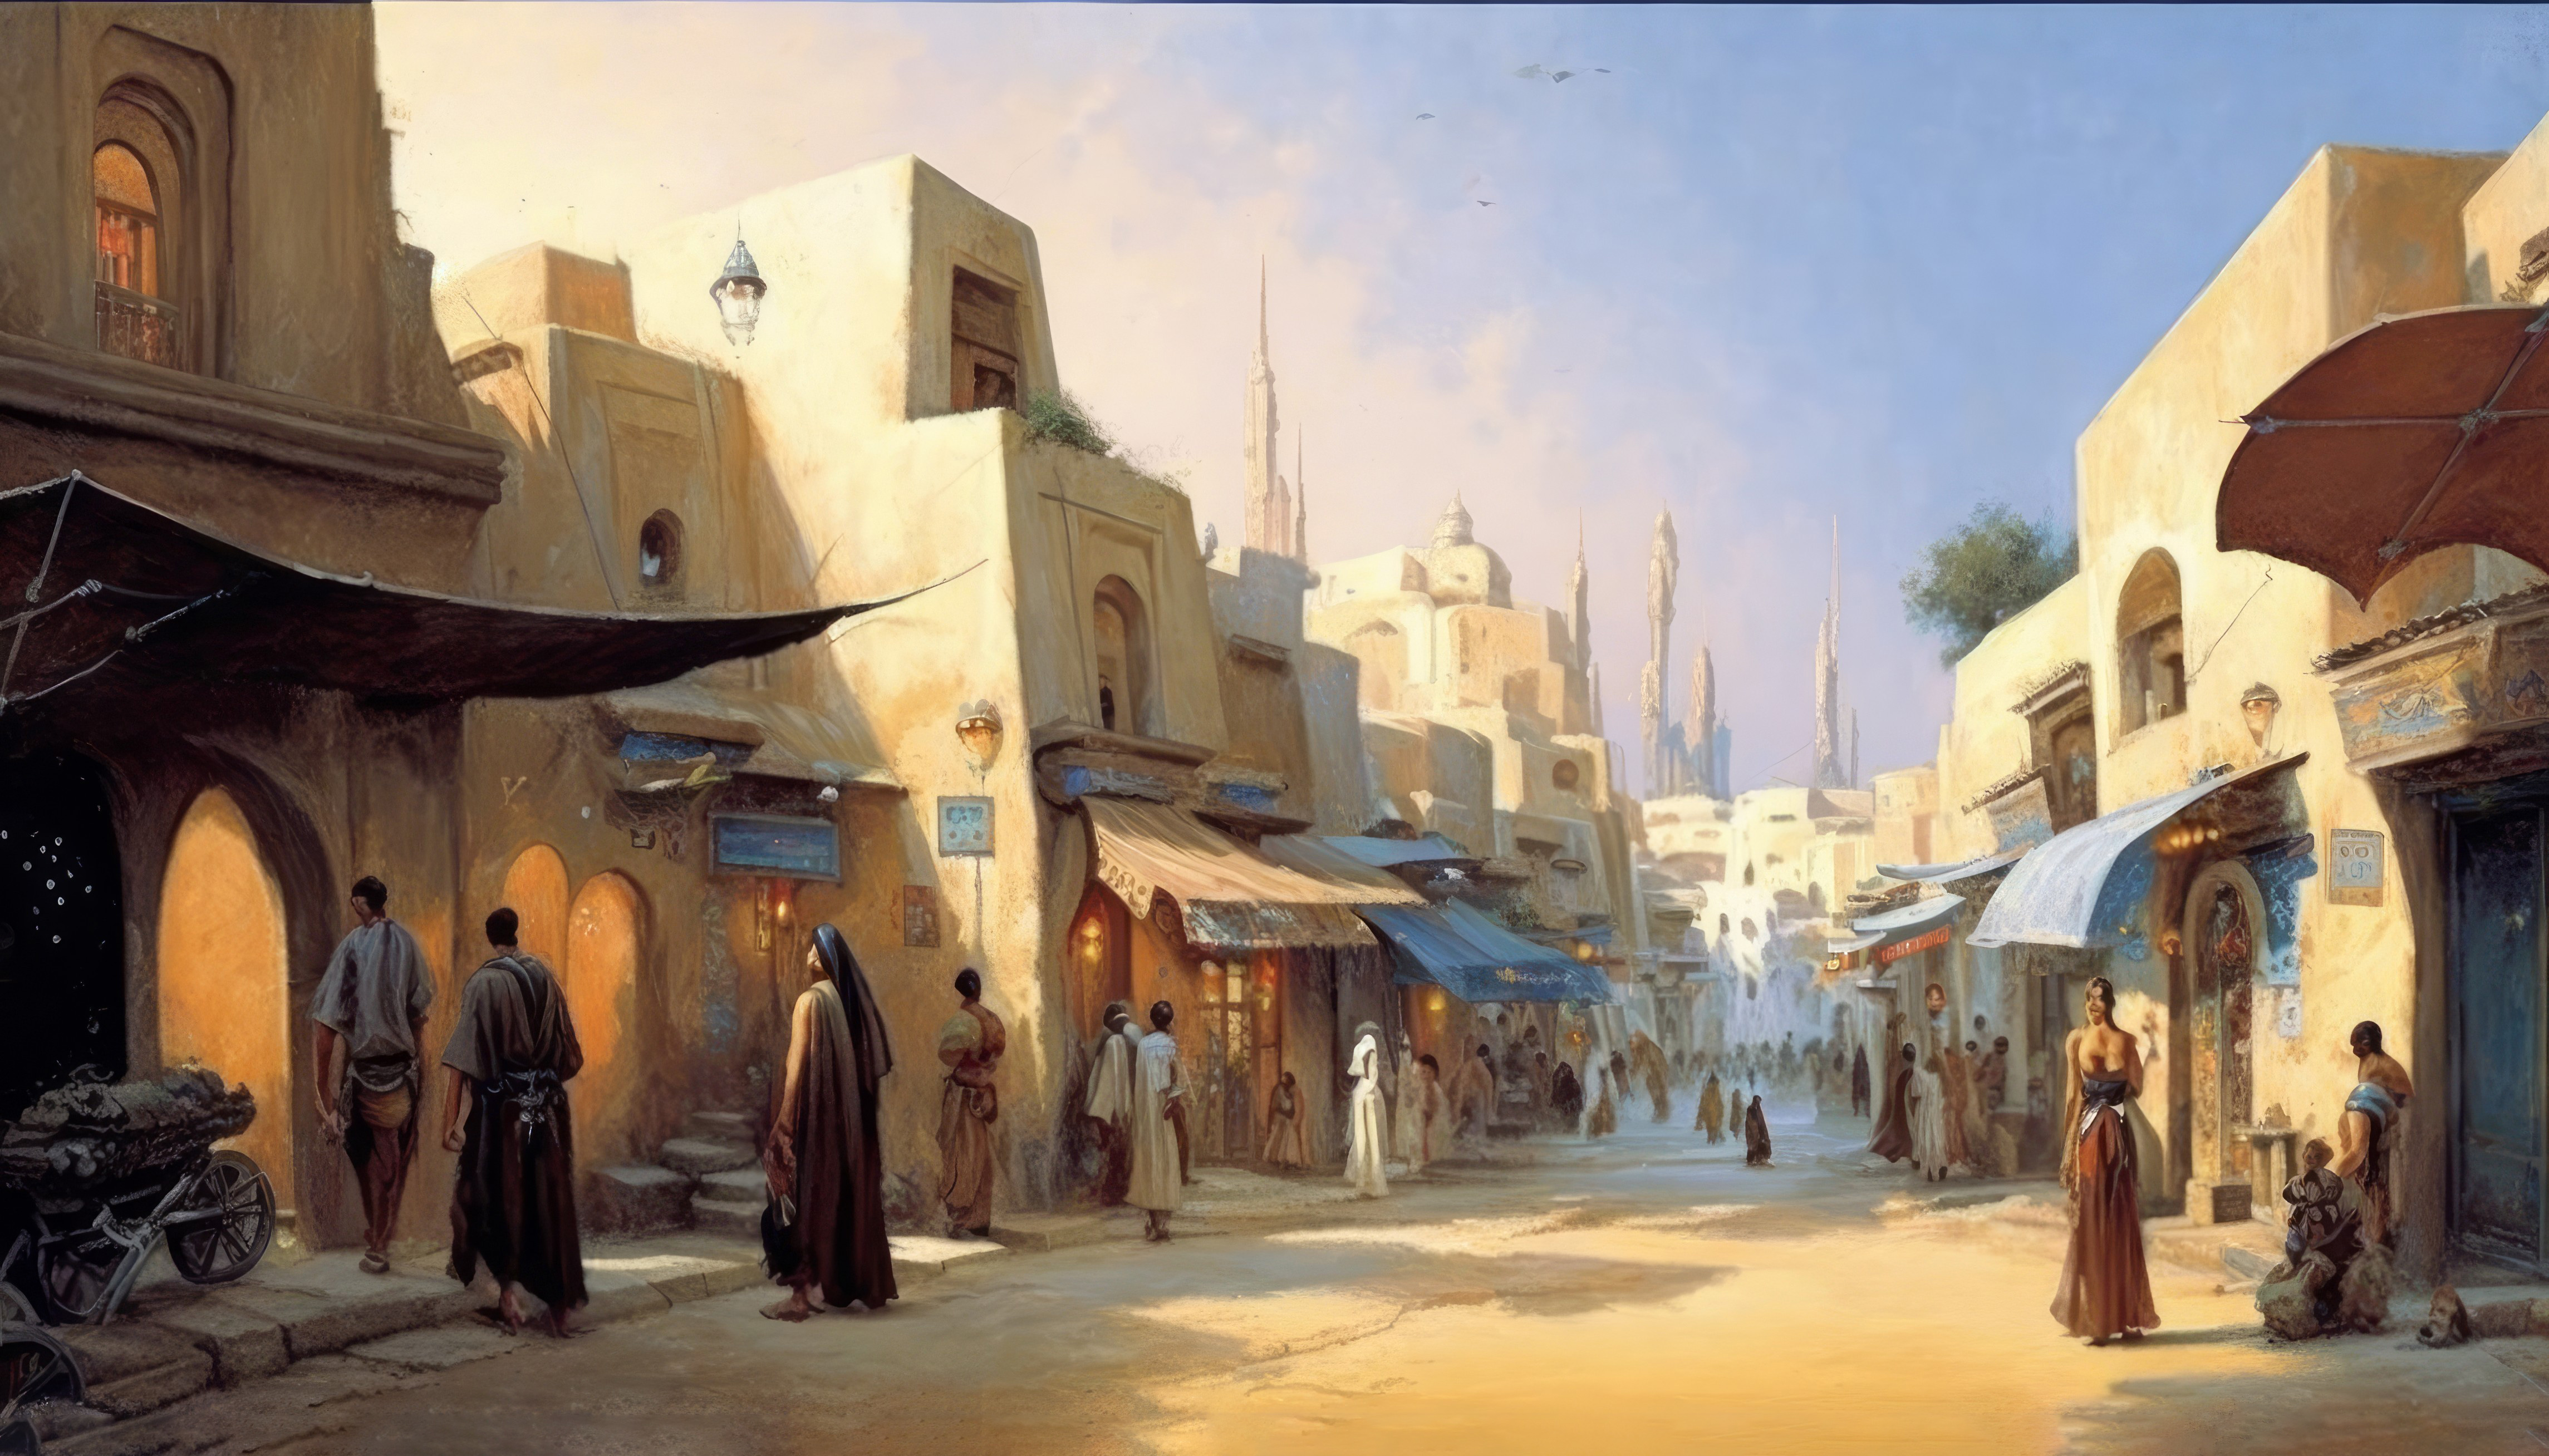 Ai Art Star Wars Tatooine Painting City Building People 4579x2616